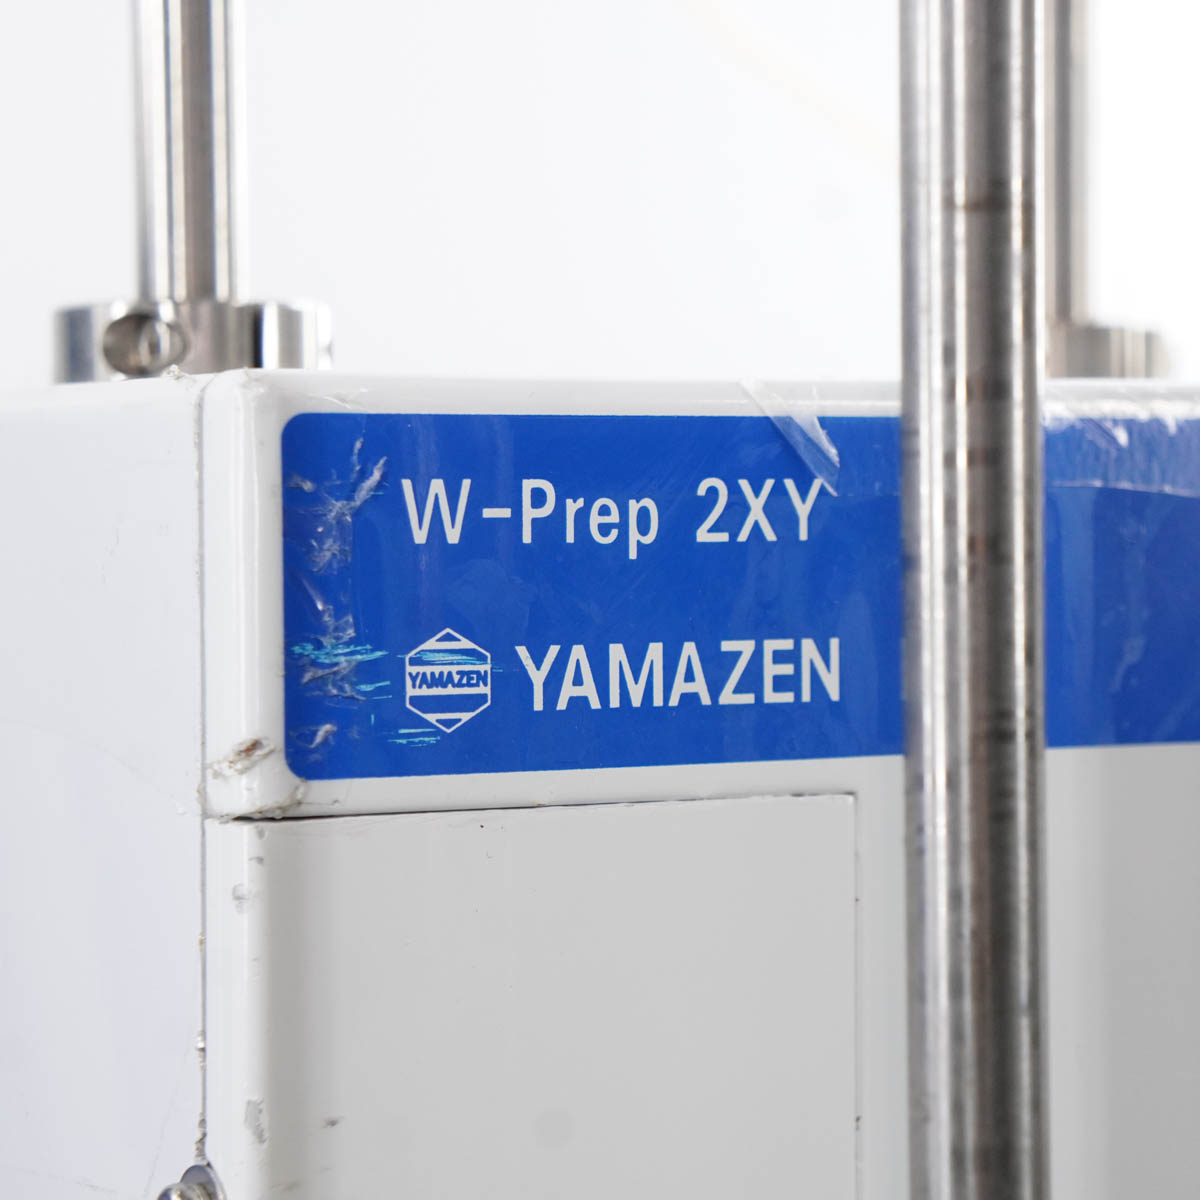 [DW]USED 8日保証 セット YAMAZEN Parallel Frac FR-260 W-Prep 2XY PUMP 580D HPLC 液体クロマトグラフ 液クロ[ST03999-0009] - 9